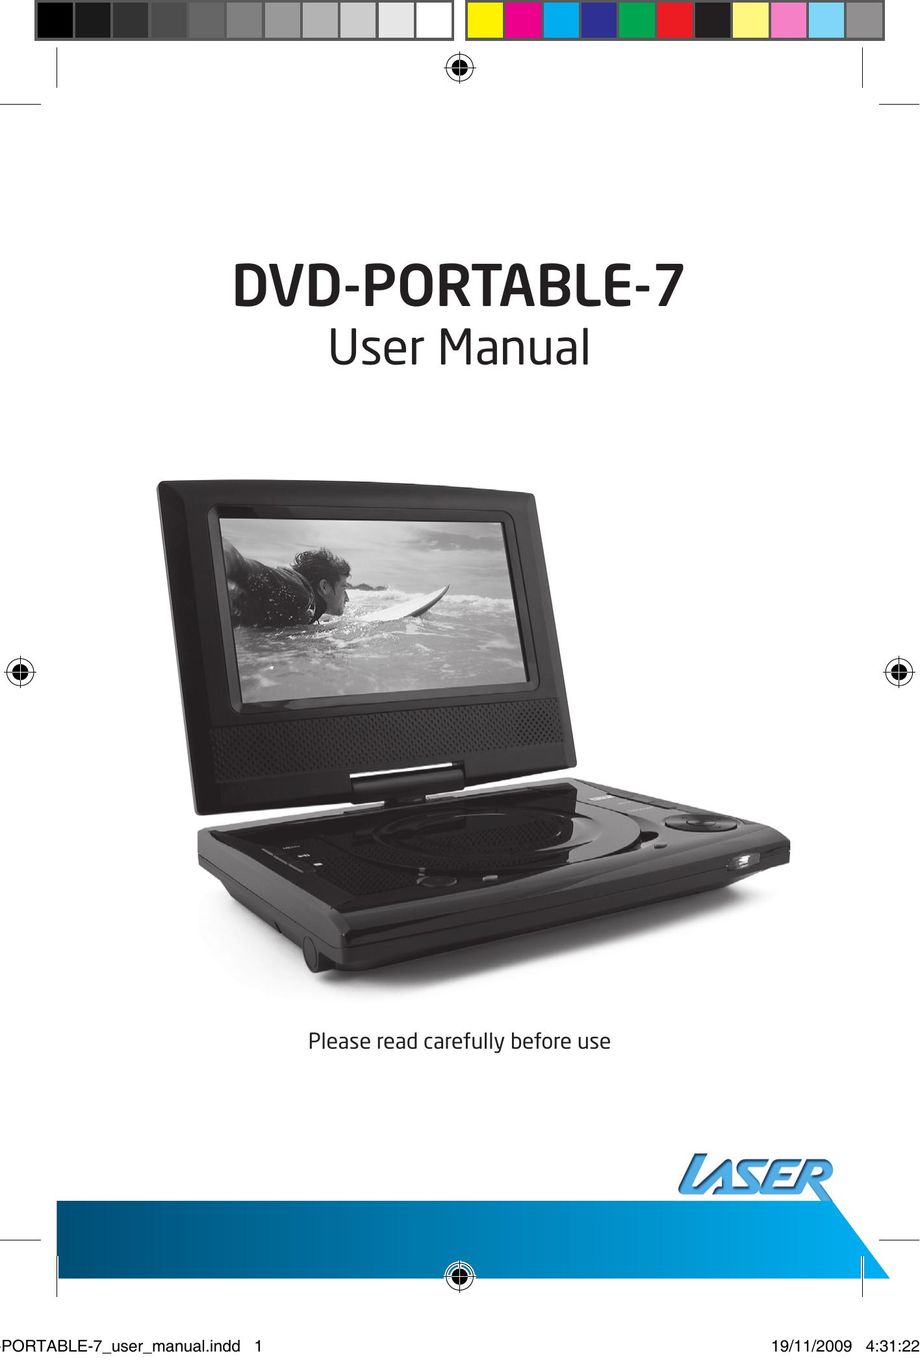 Laser DVD-PORTABLE-7 Portable DVD Player User Manual